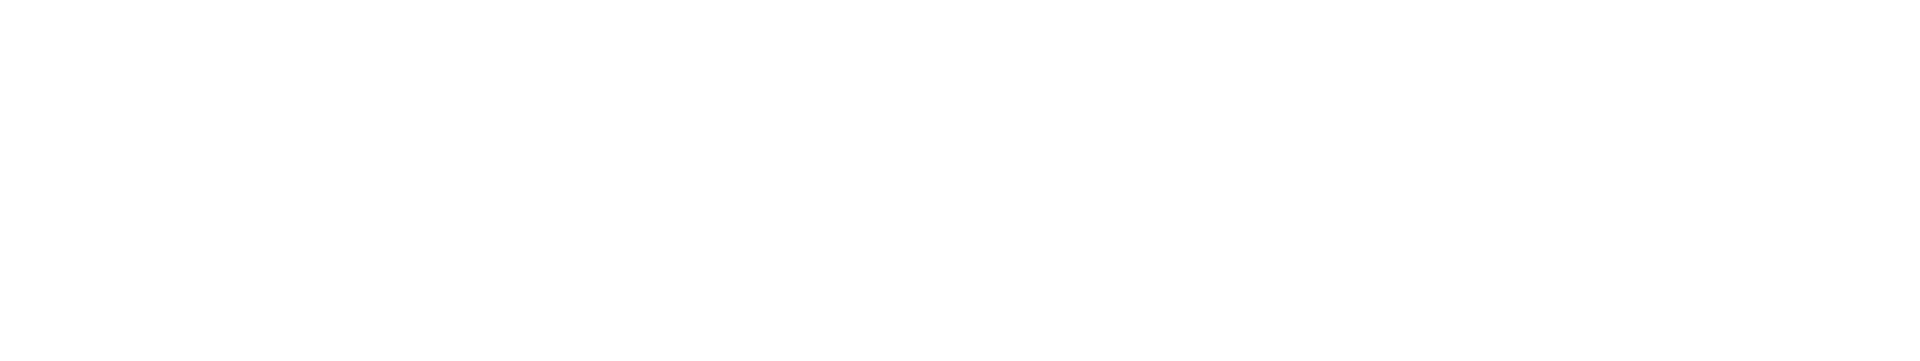 WW_logo_Linear_white